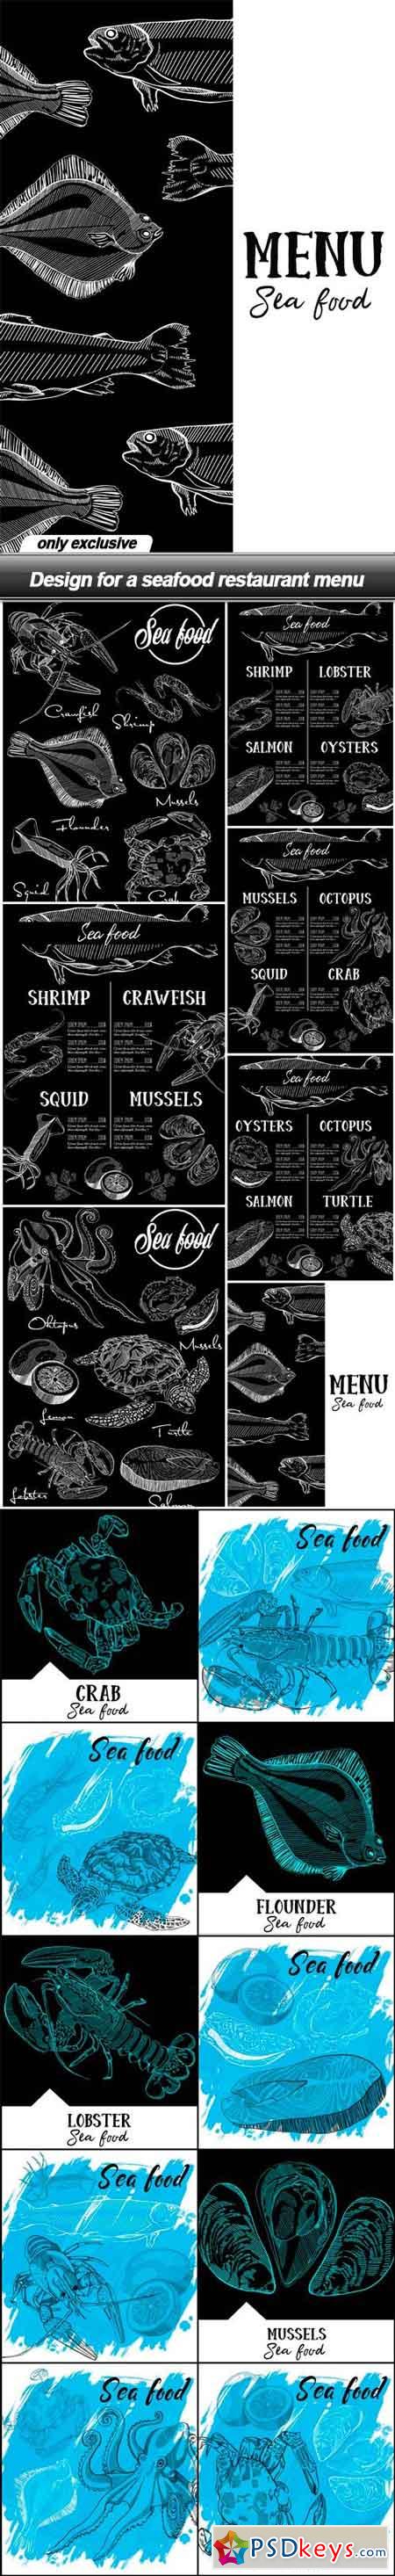 Design for a seafood restaurant menu - 17 EPS